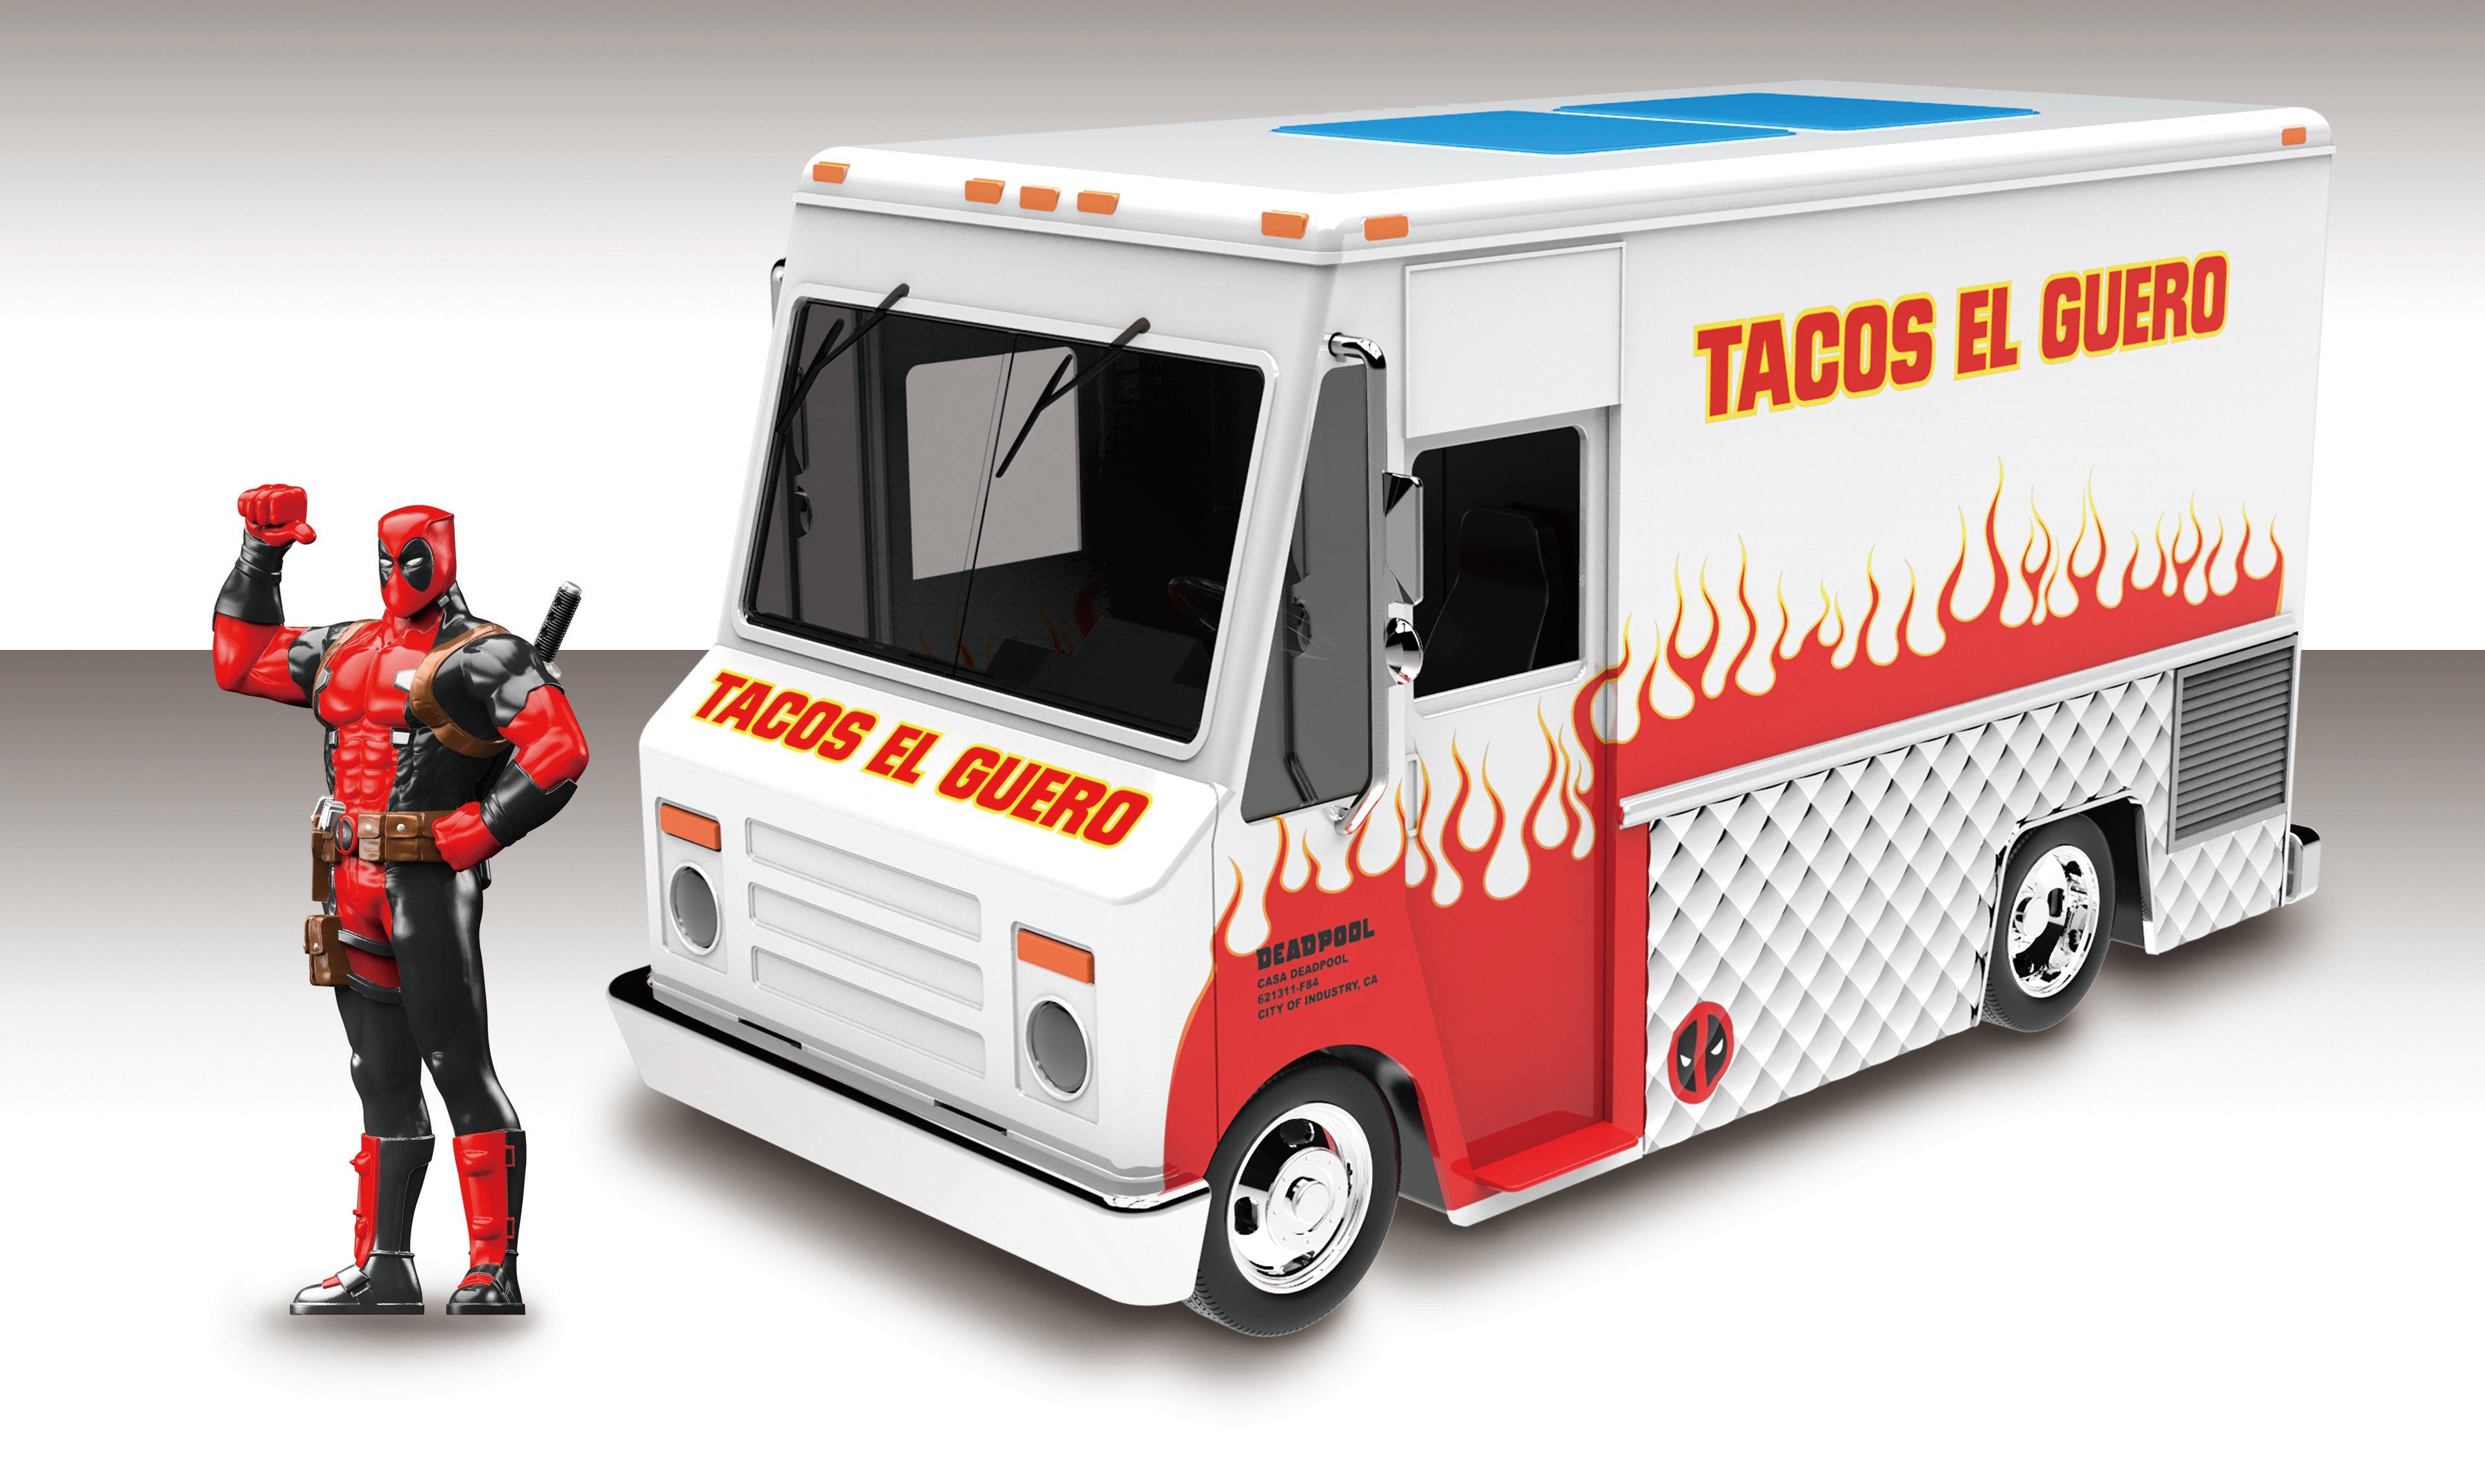 deadpool taco truck